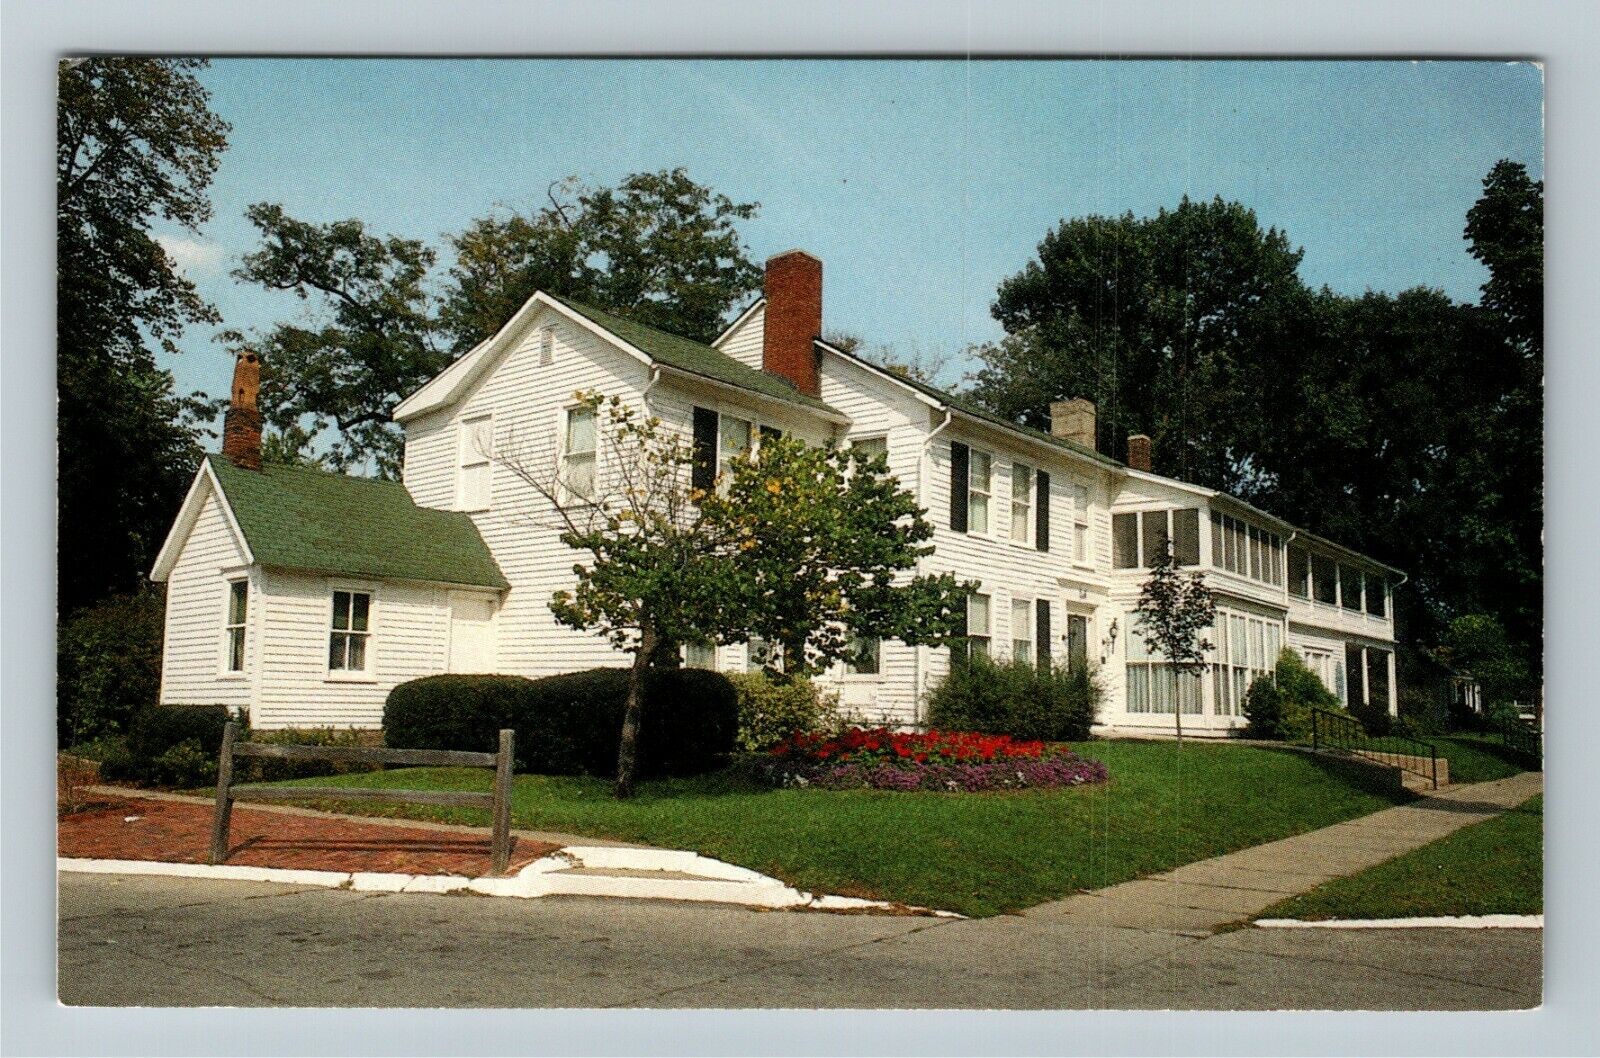 Pella IA-Iowa, Scholte House, Exterior, Across From Park, Vintage Postcard